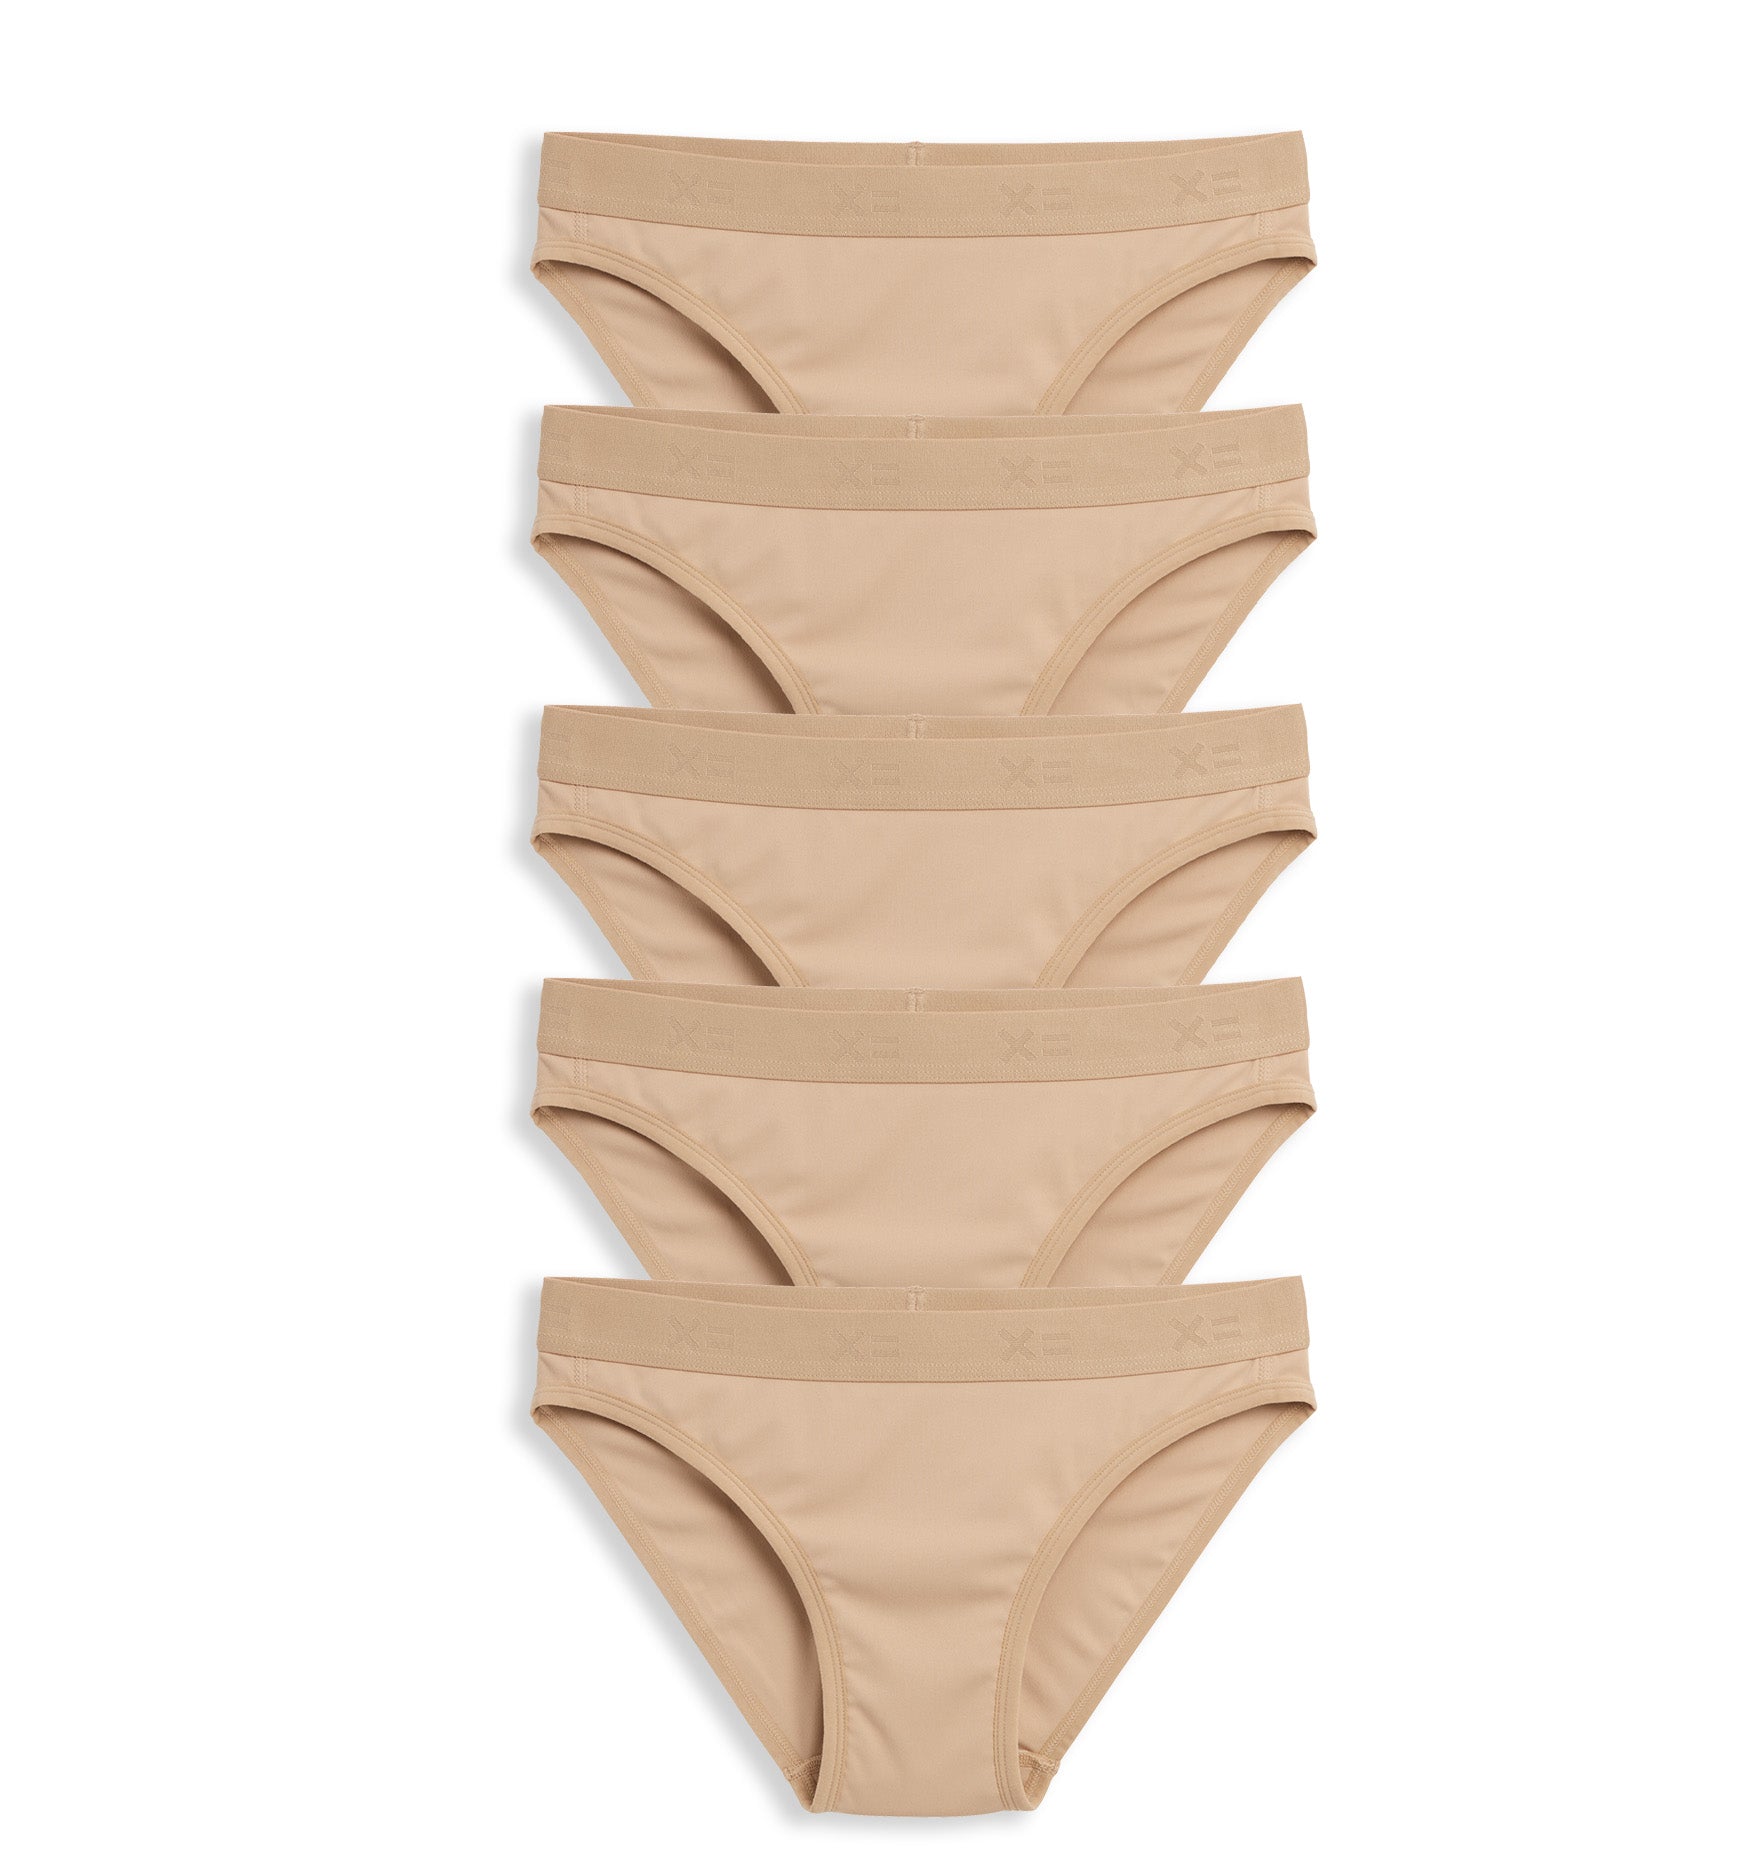 Tomboyx Tucking Hiding Bikini Underwear, Secure Compression Gaff